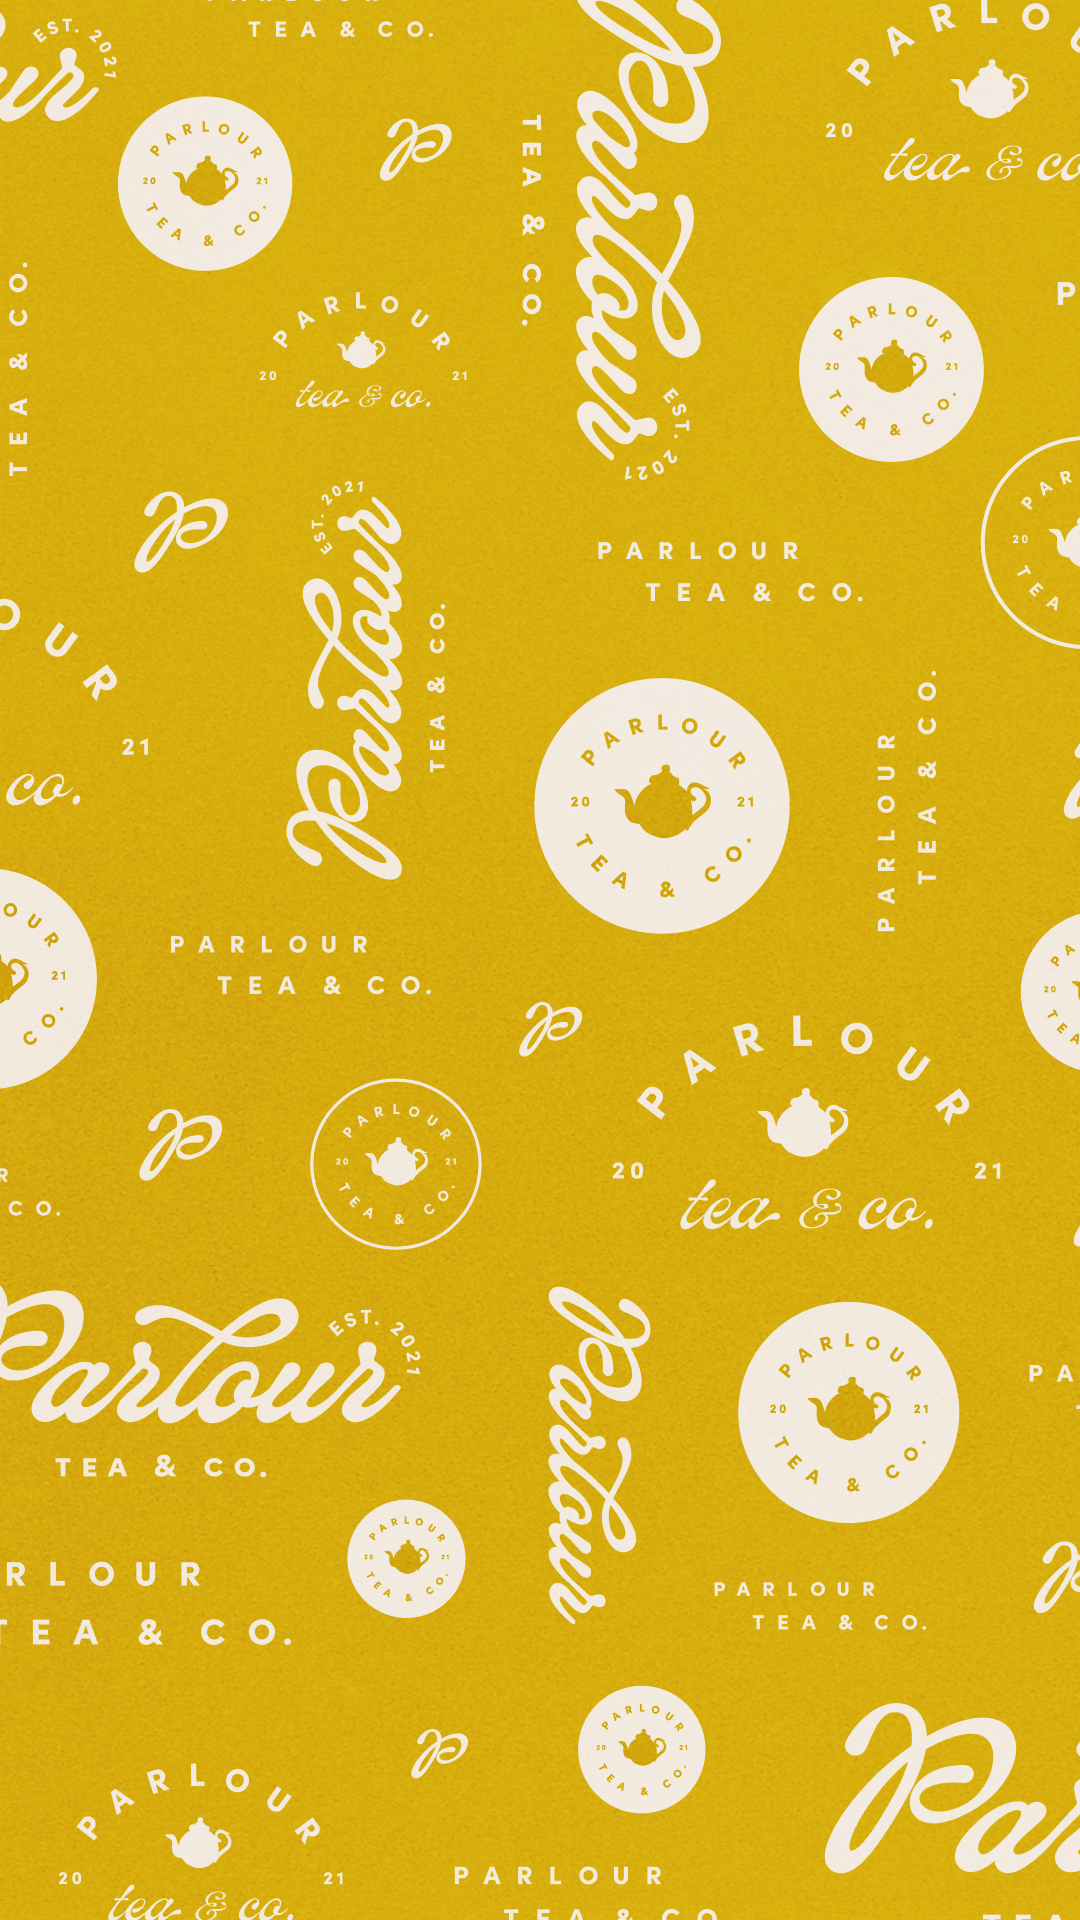 plantspacestudio-parlour-tea-co-branding-logos-marks-pattern-yellow2.png